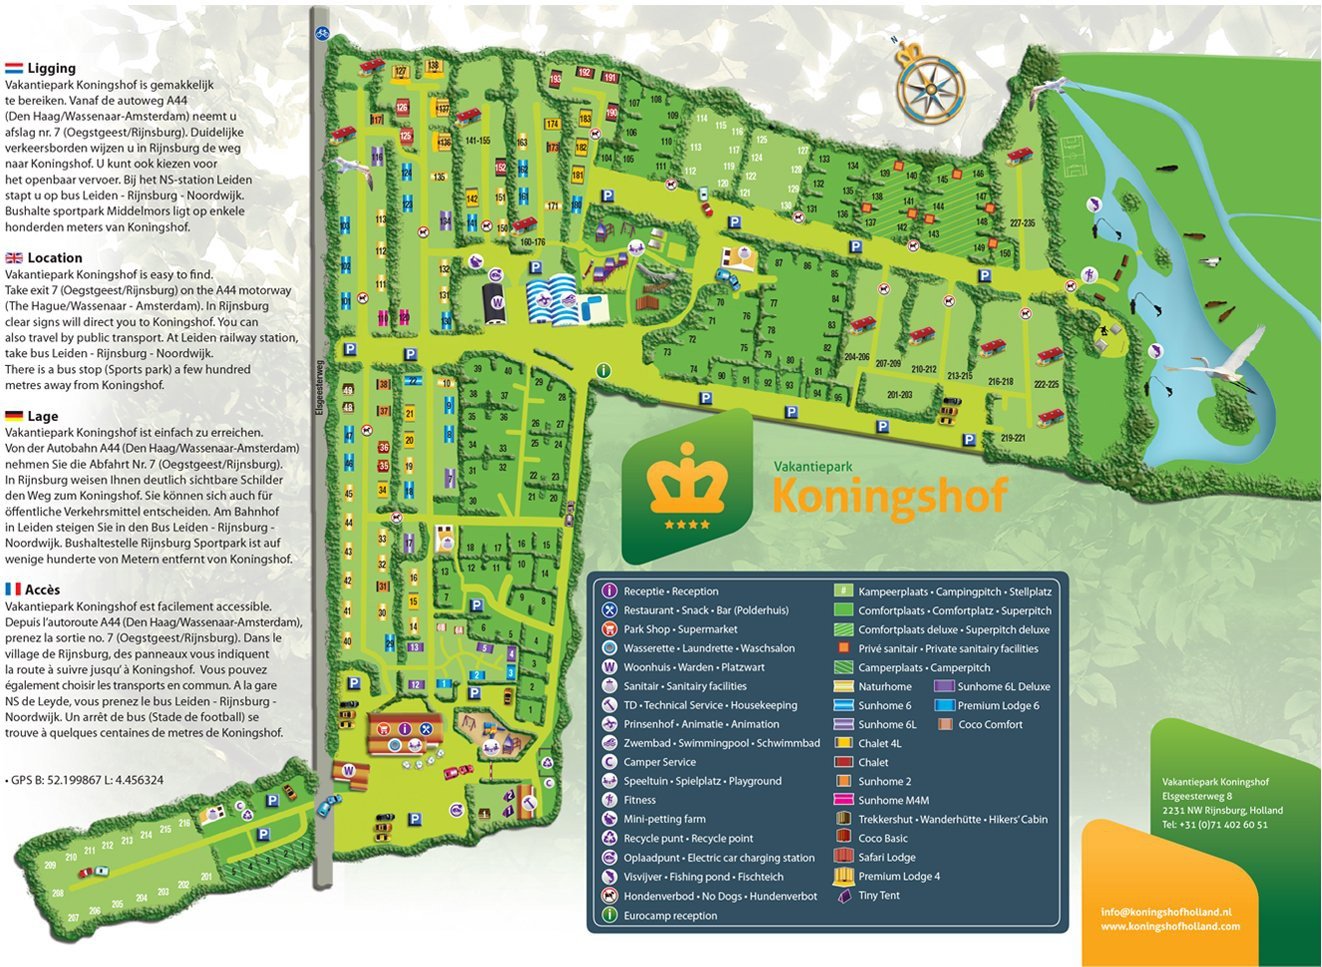 Vakantiepark Koningshof plattegrond